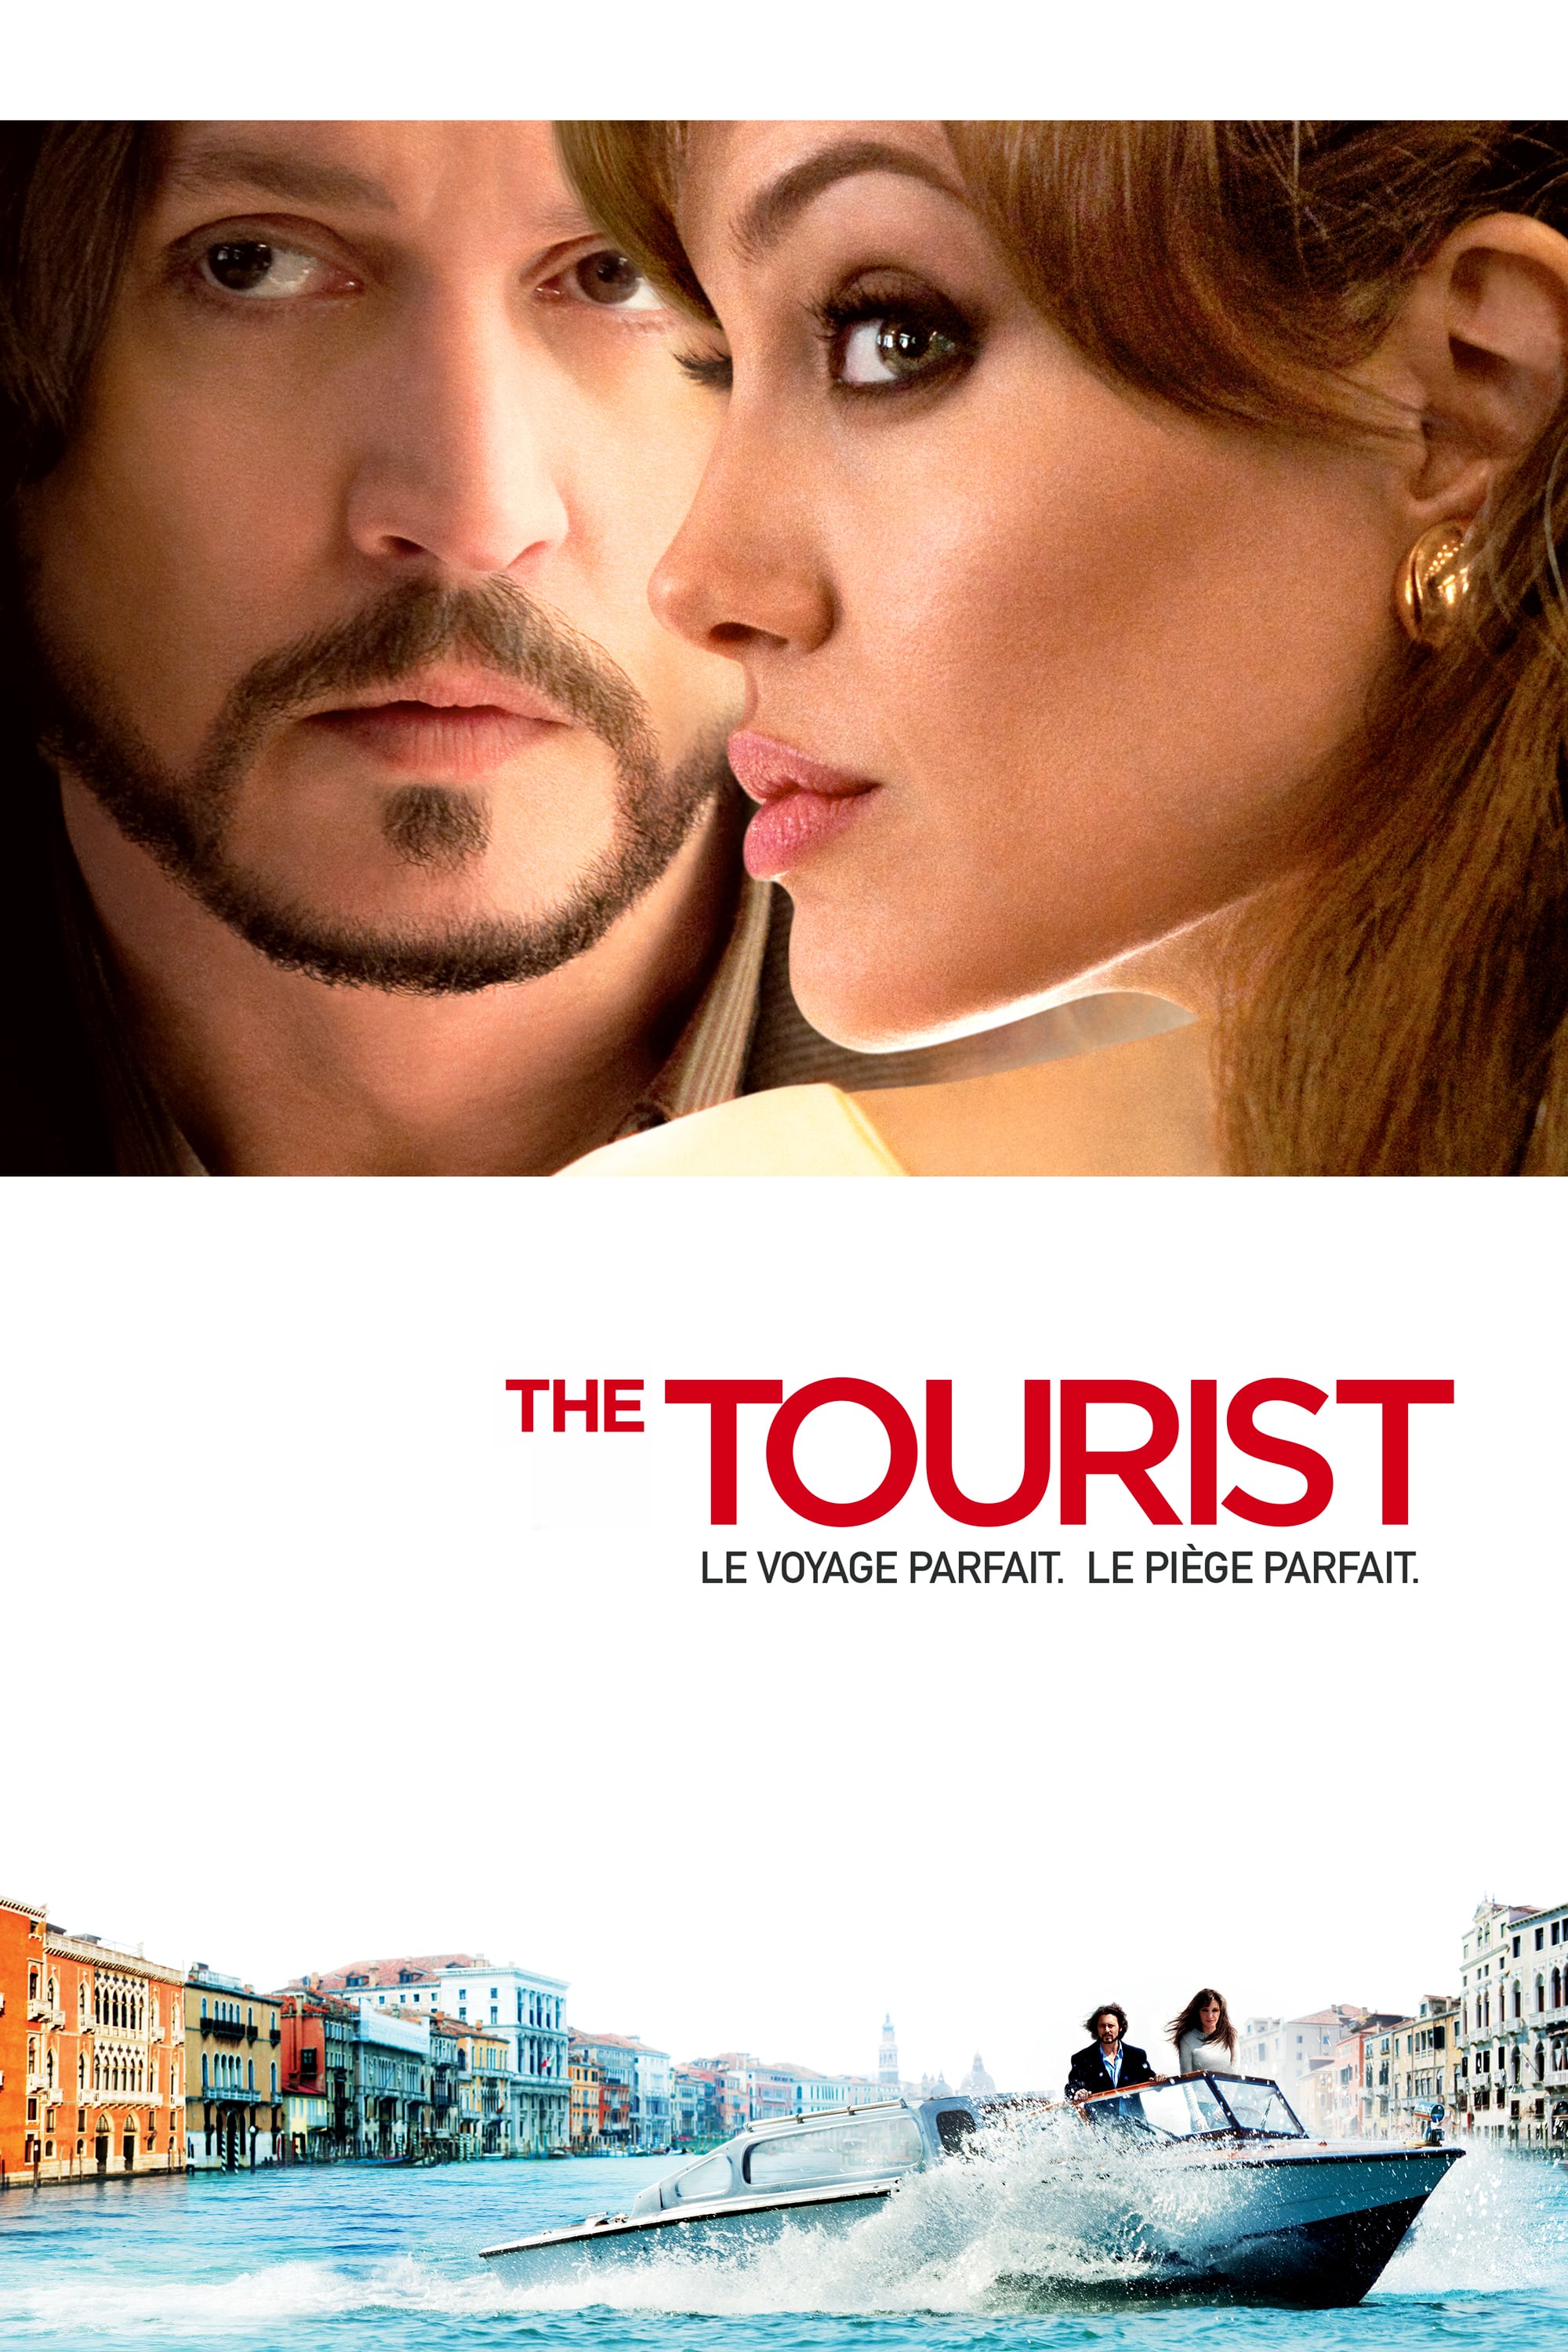 the tourist full movie youtube full movie free